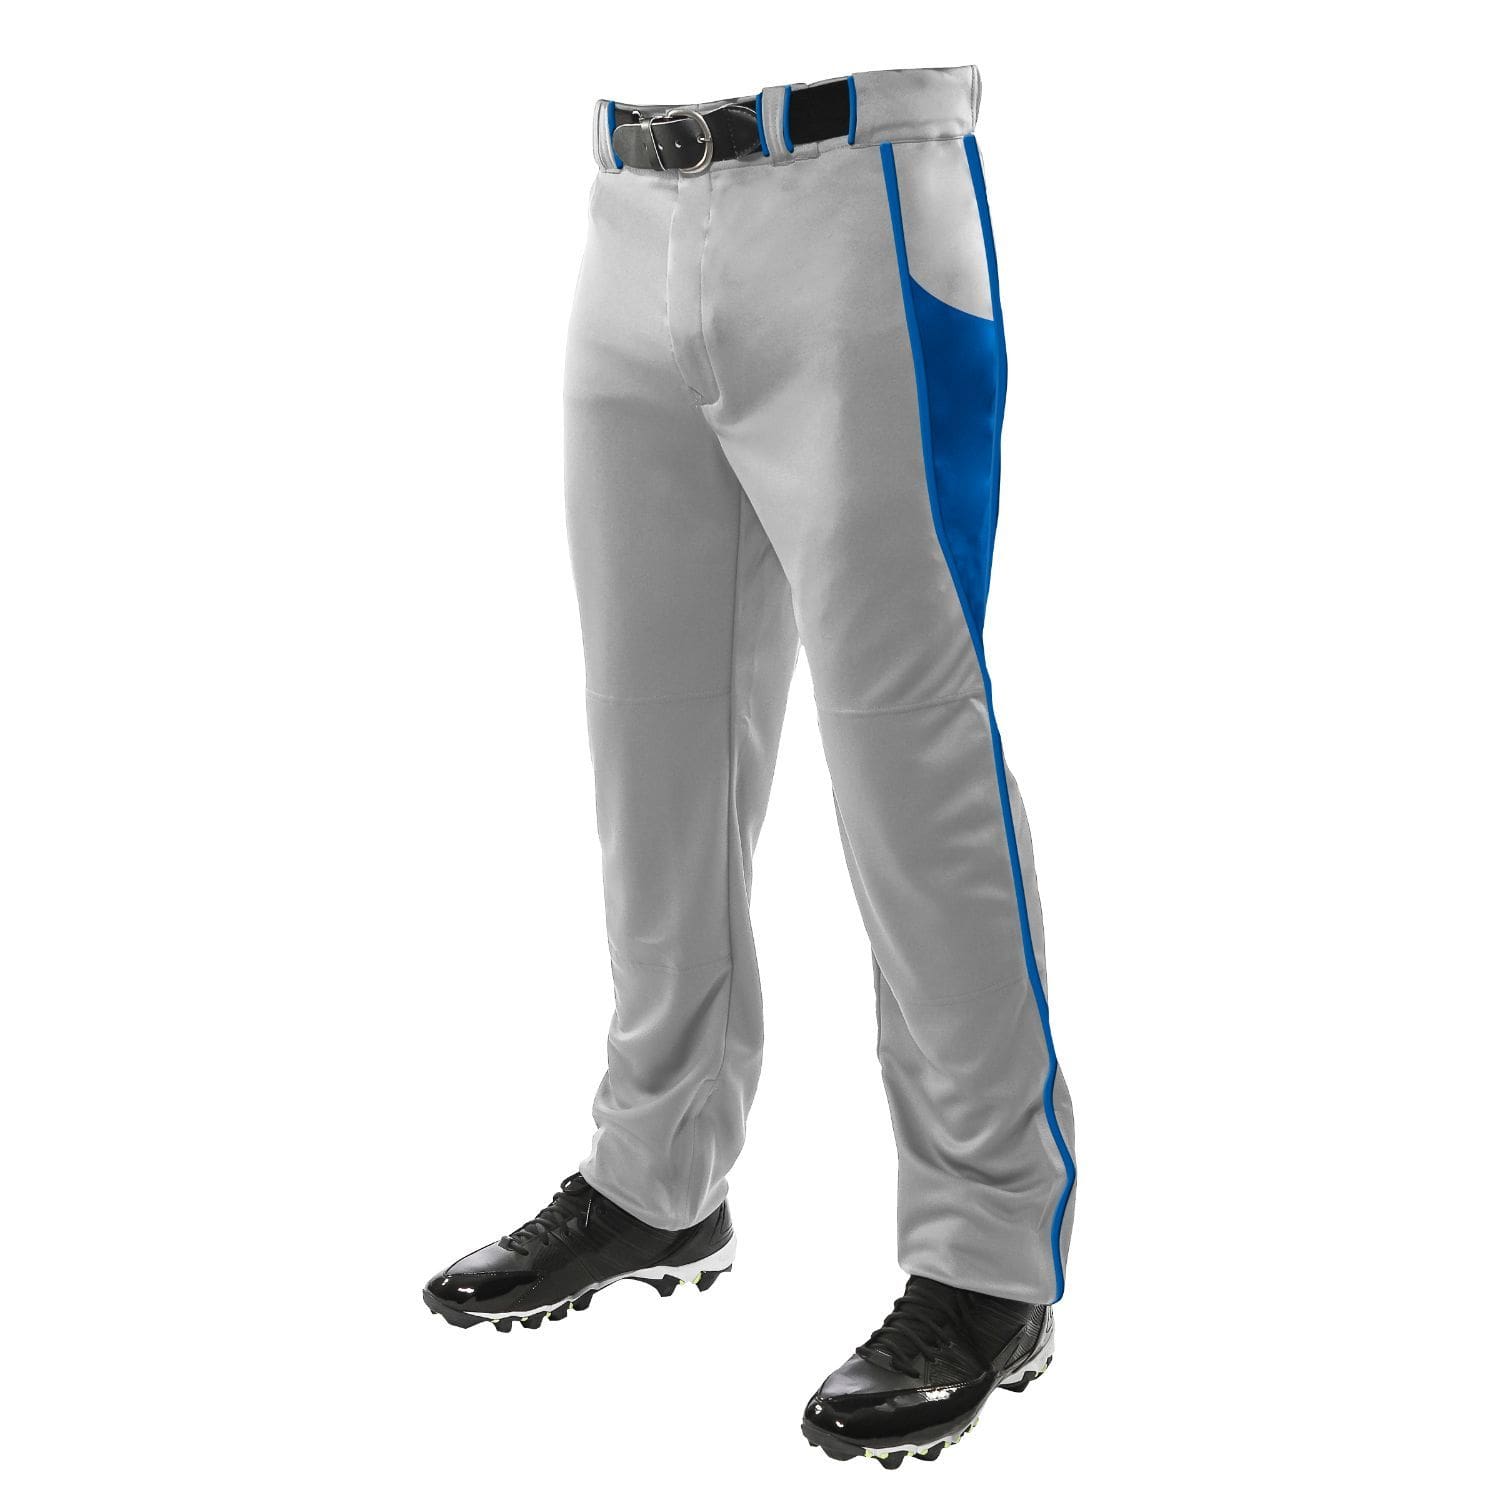 Champro Sports : Baseball Champro Adult Triple Crown Baseball Pant Grey Royal Blue XL